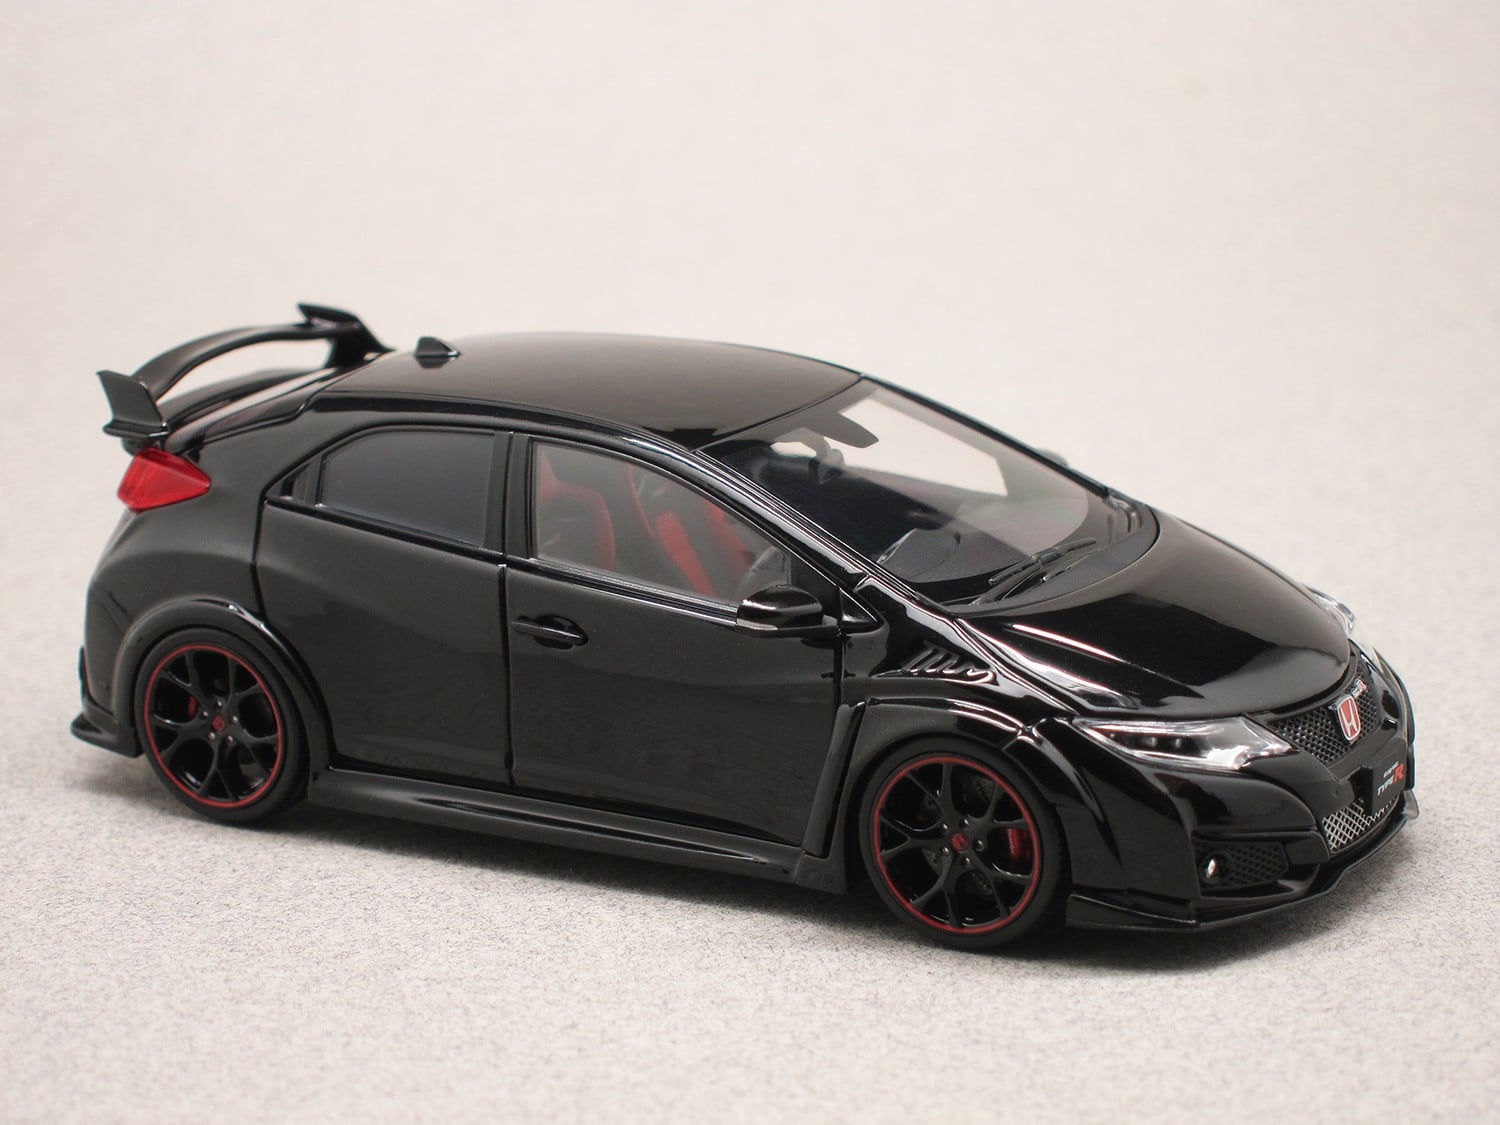 Honda Civic Type-R 2015 black (Ebbro) 1:43